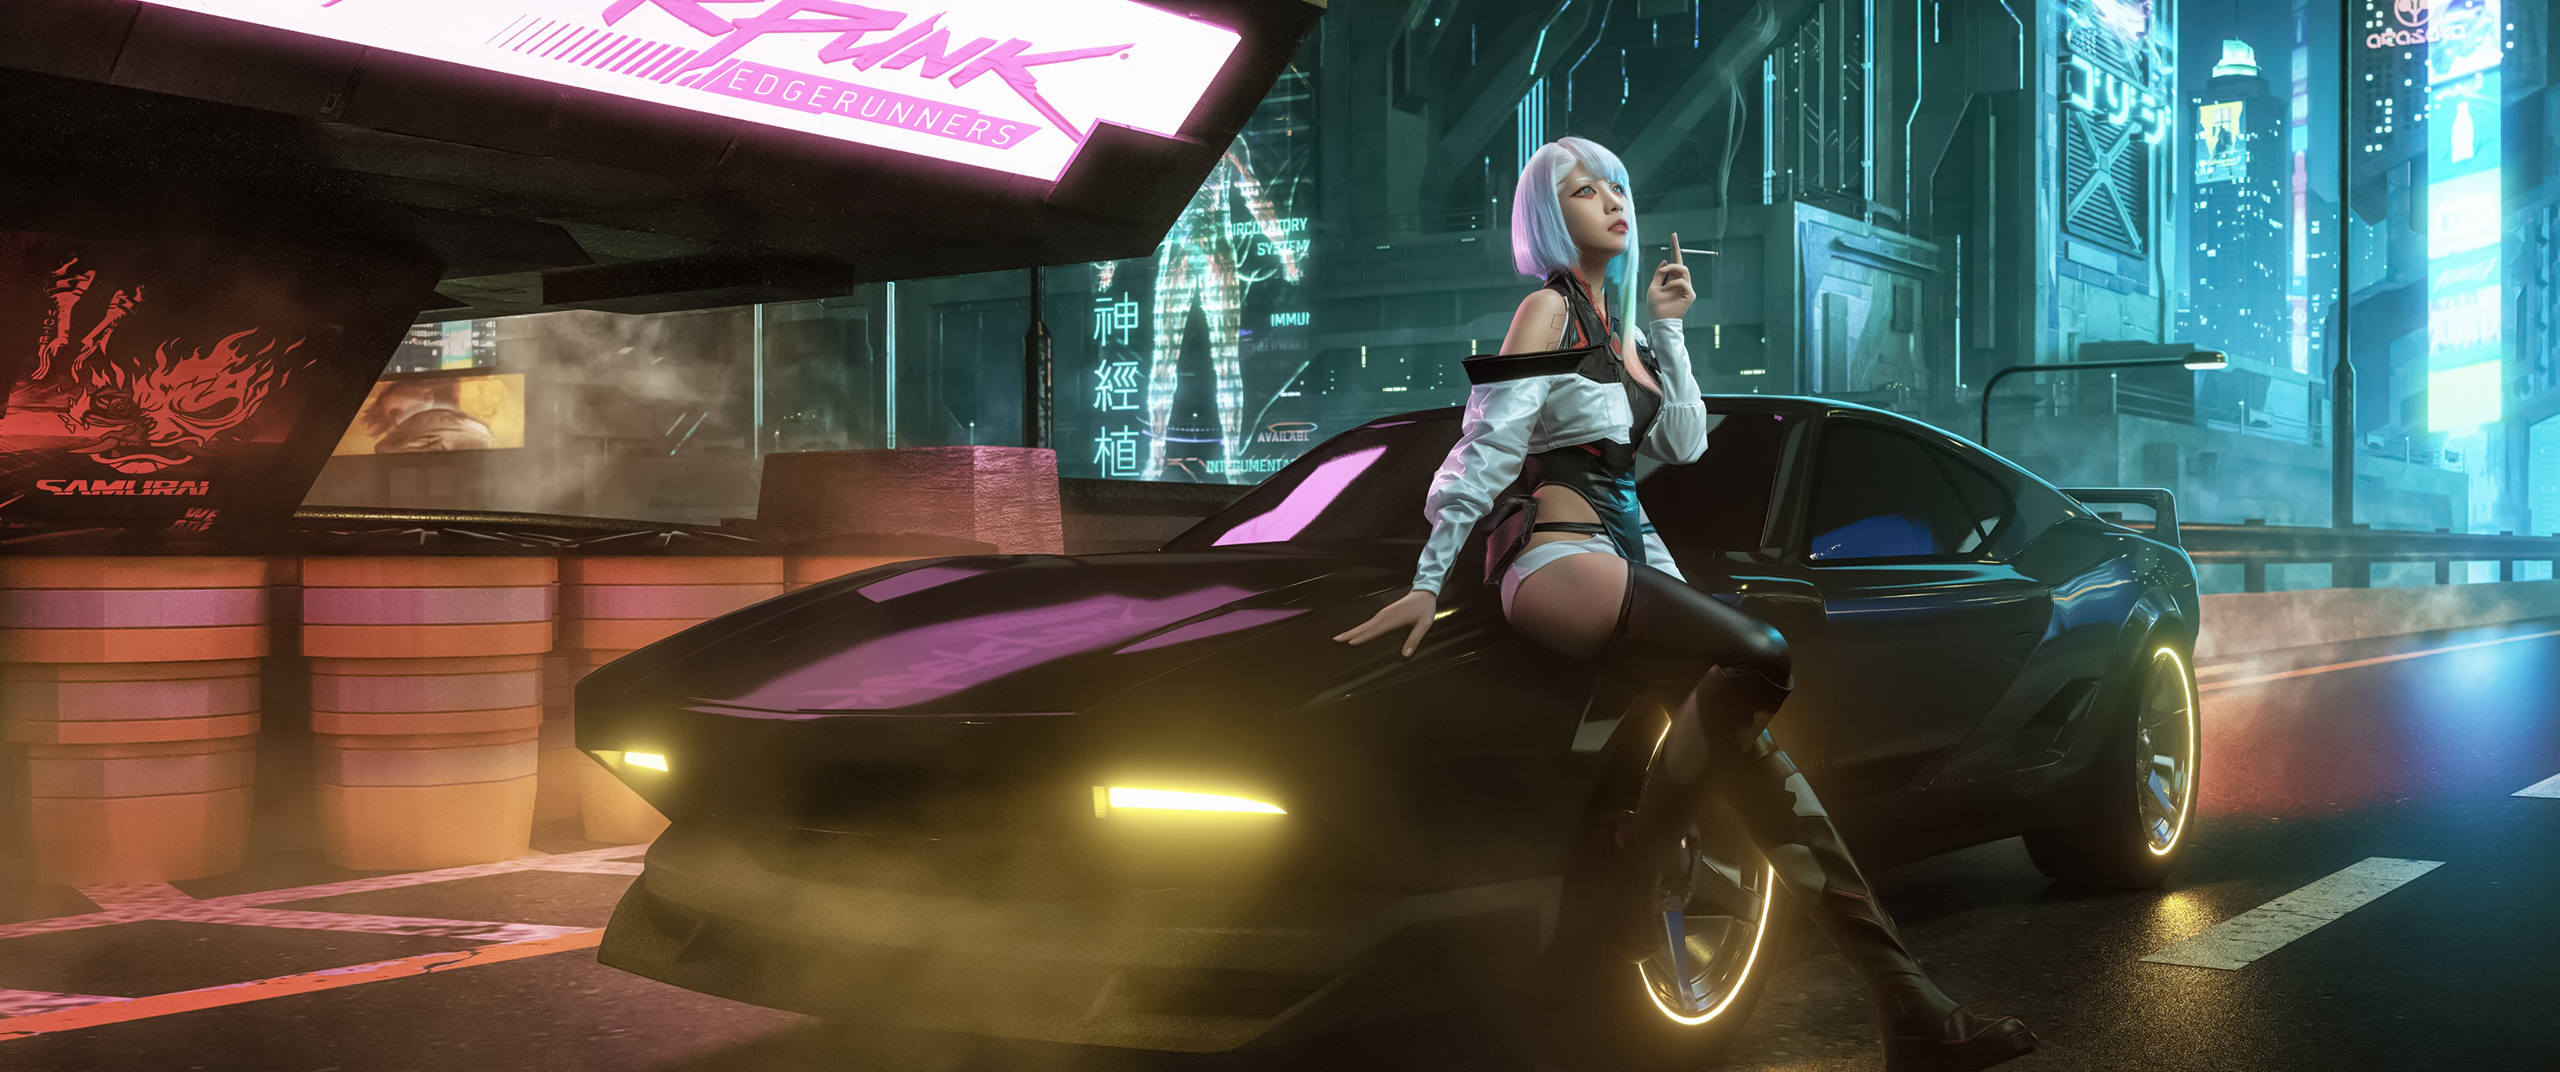 People 2560x1072 Neko Koyoshi women Cyberpunk: Edgerunners cosplay silver hair leather car cyberpunk pink neon Asian